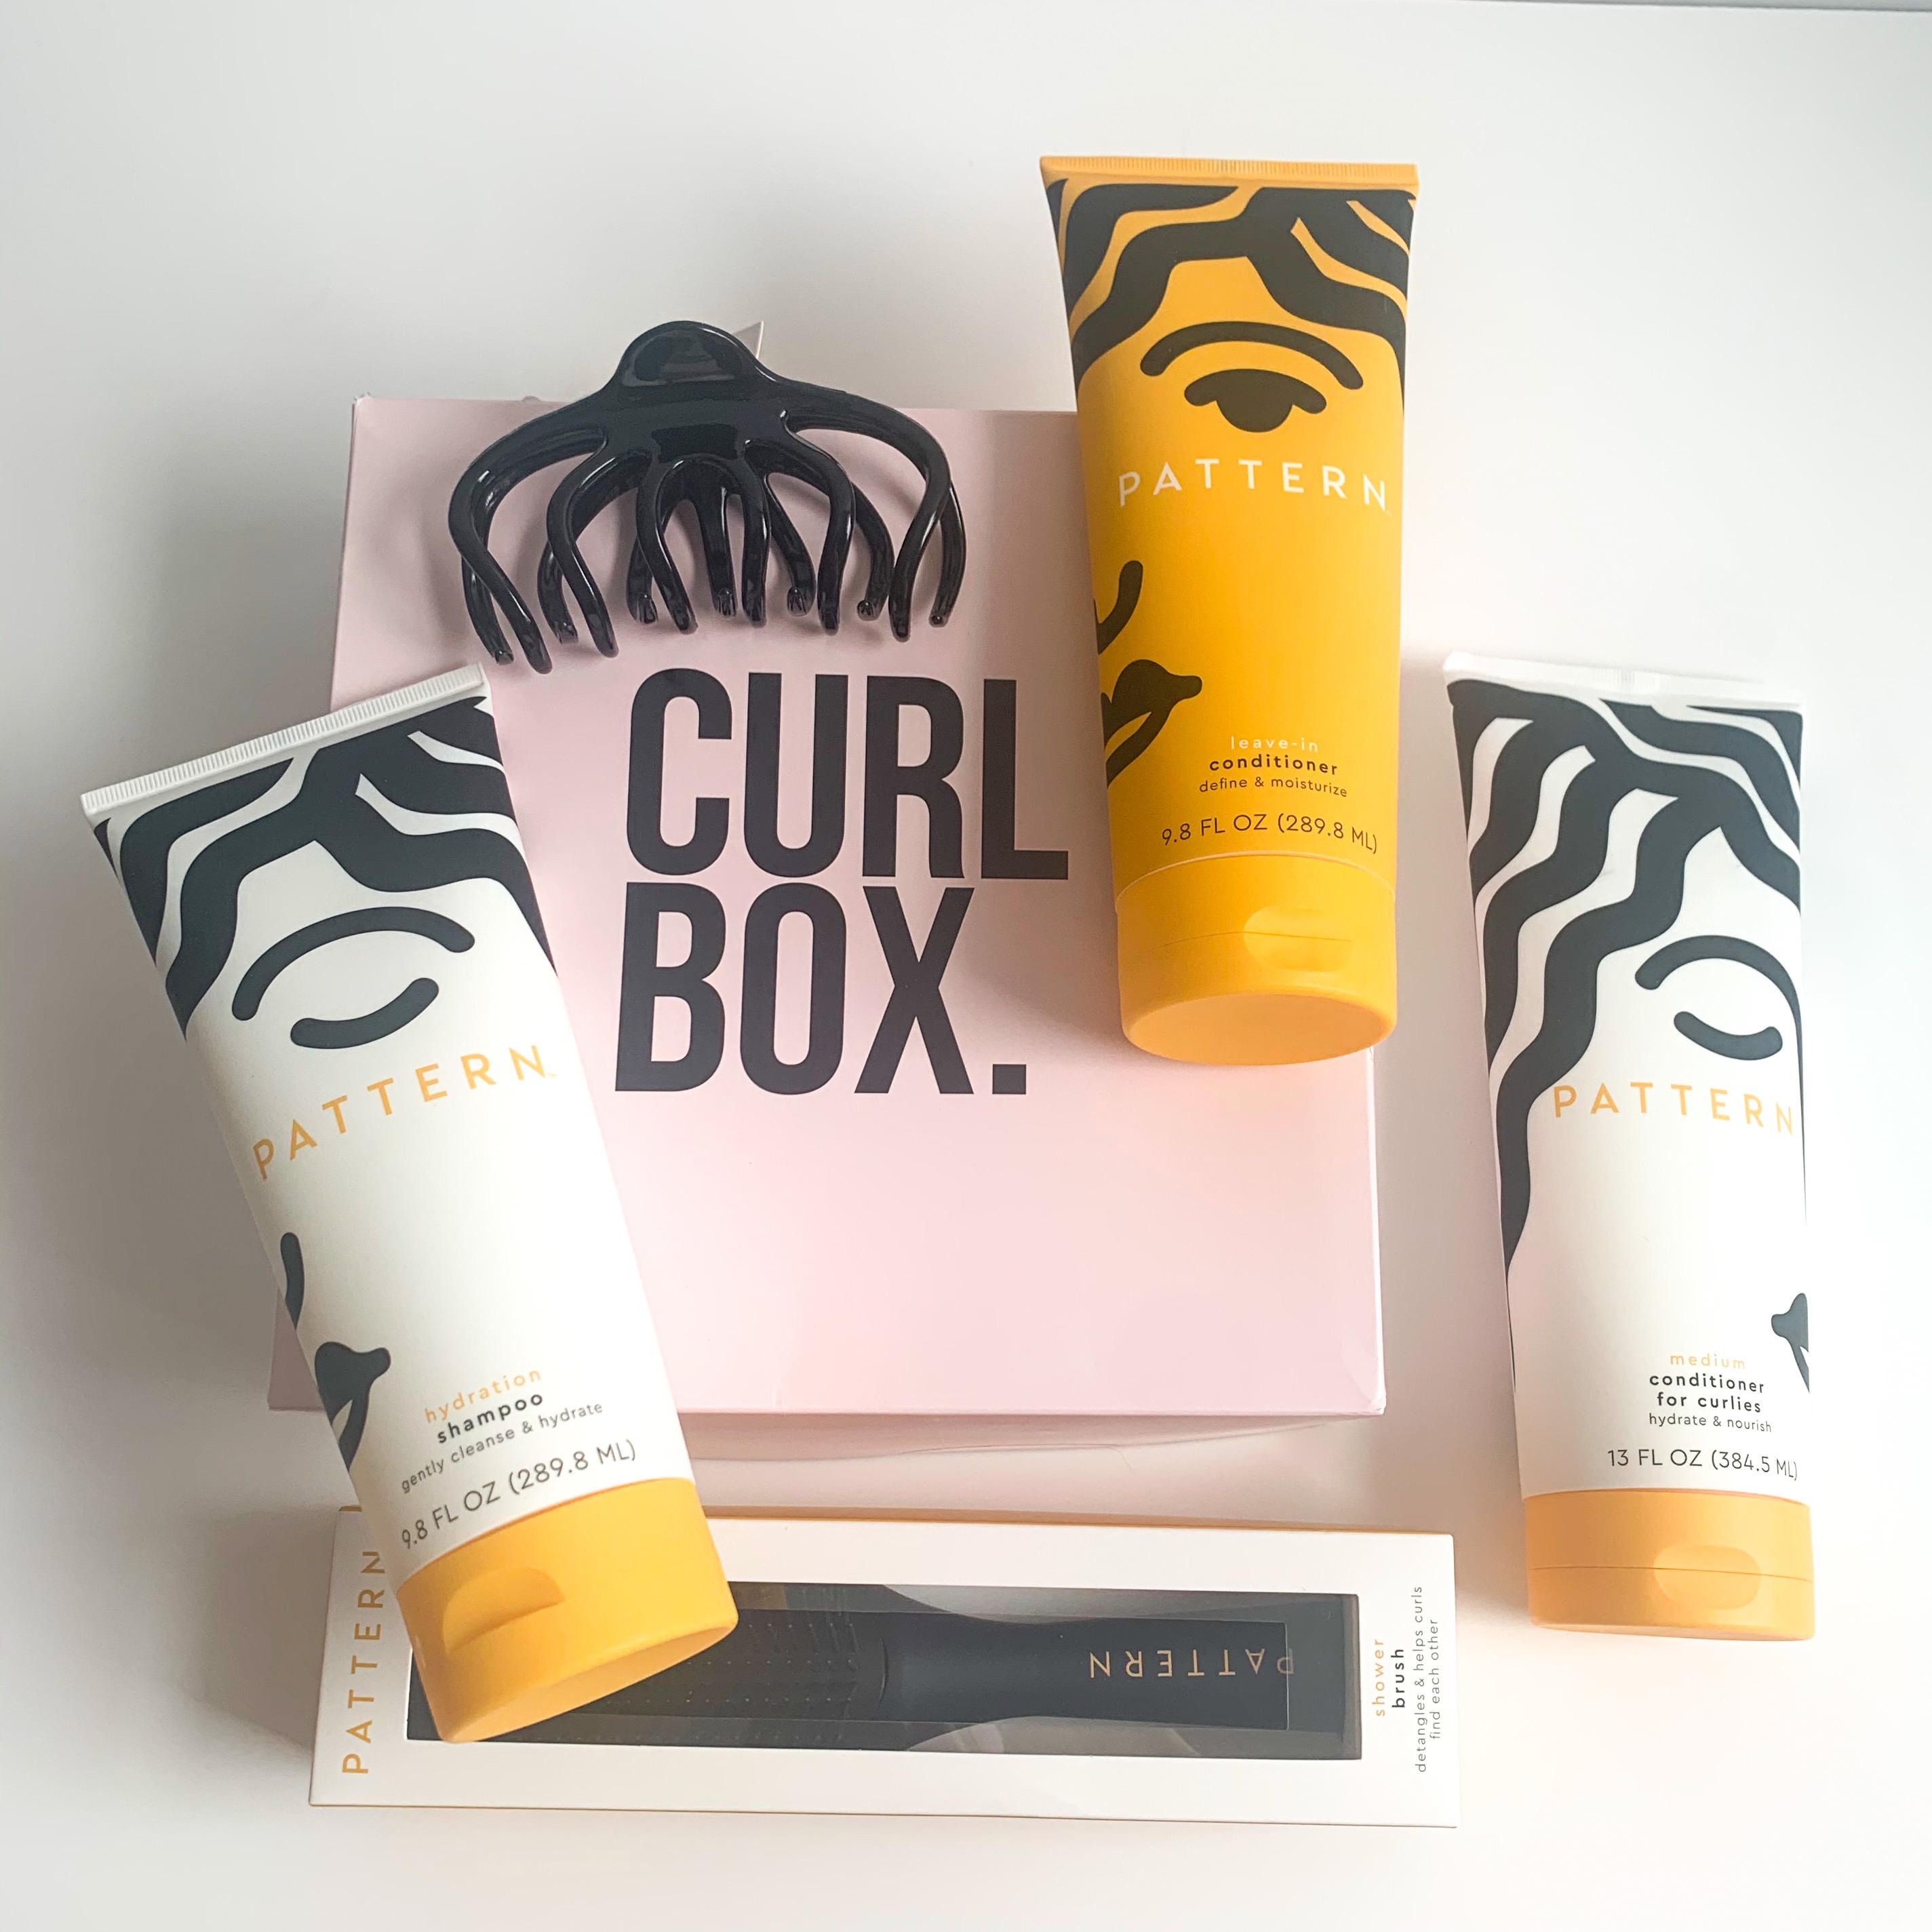 Curlbox x PATTERN Beauty Box Review – October 2020